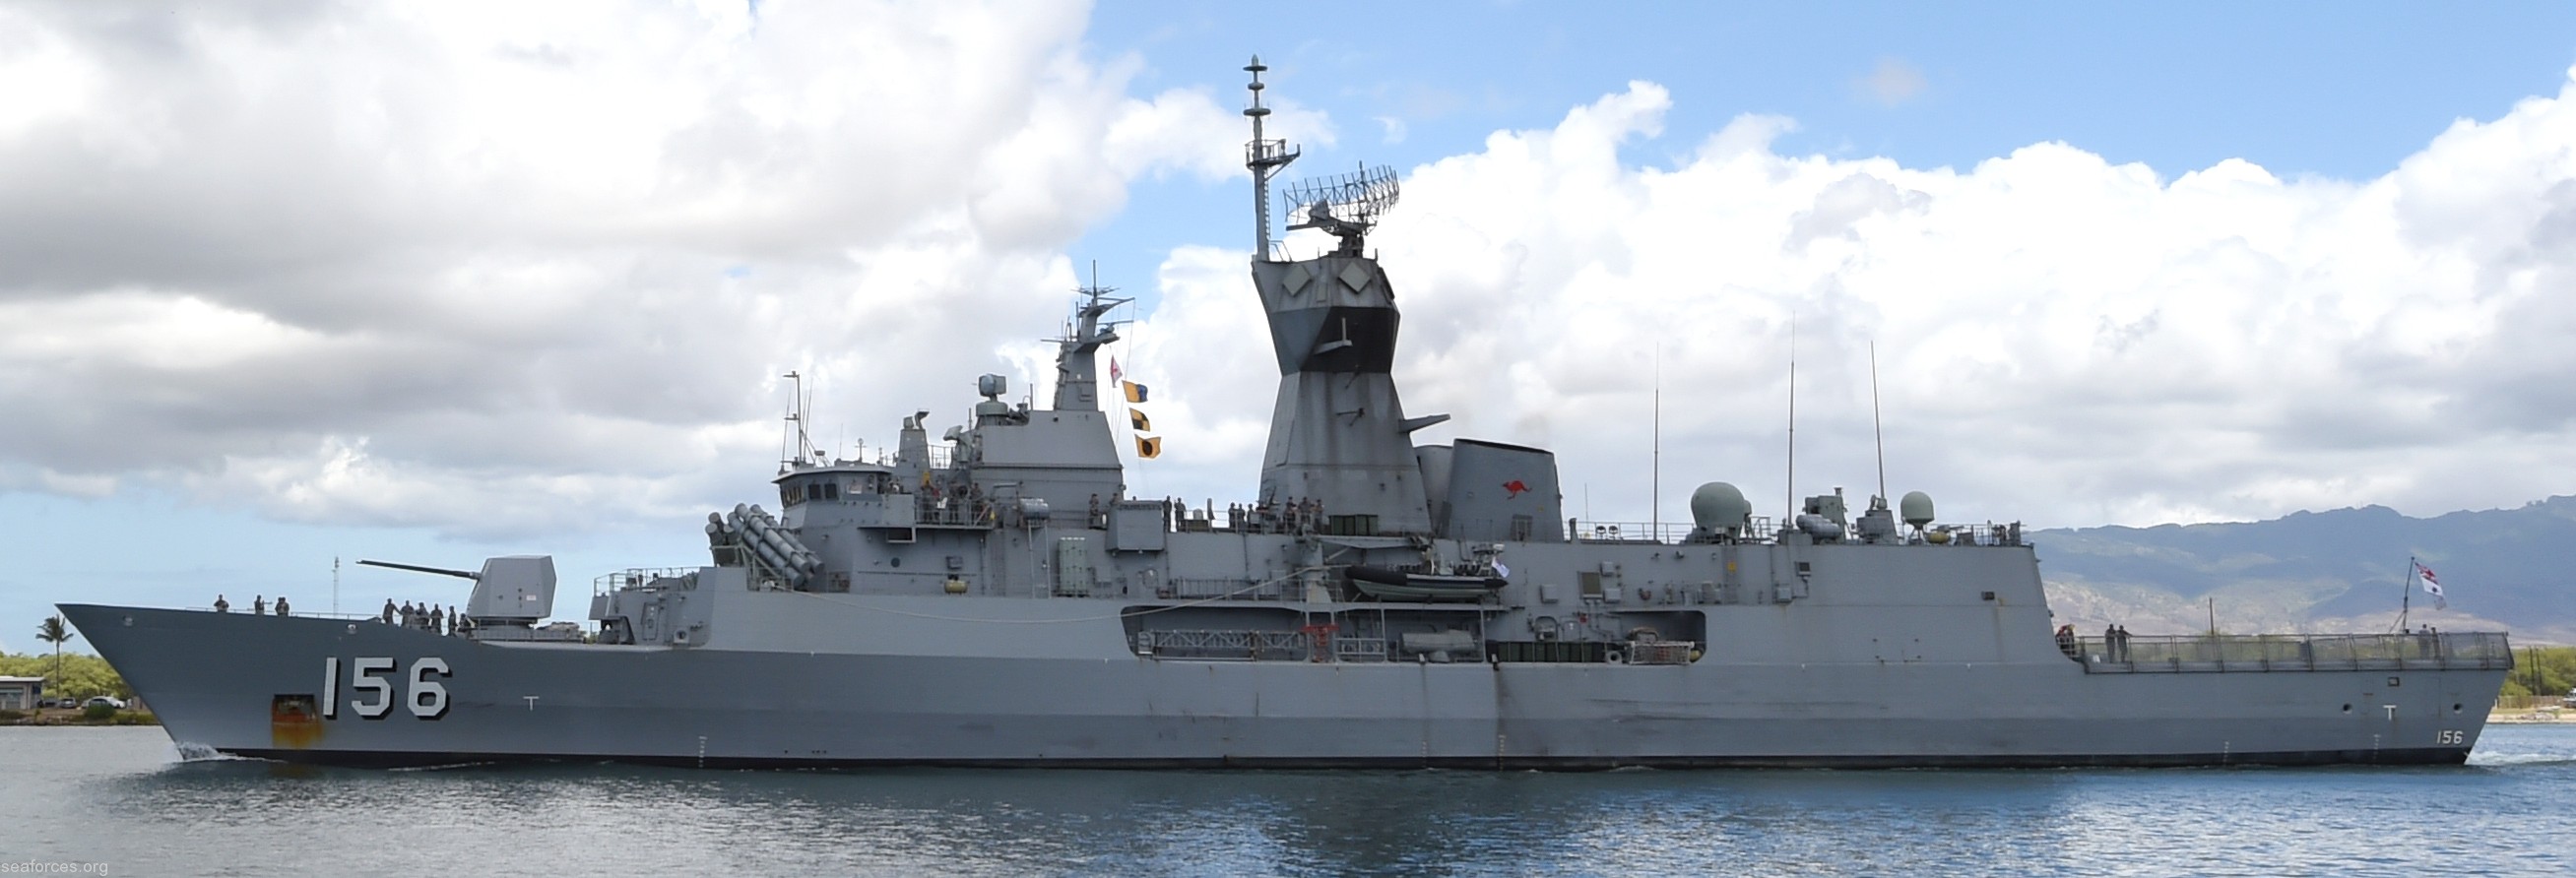 ffh-156 hmas toowoomba anzac class frigate royal australian navy 06